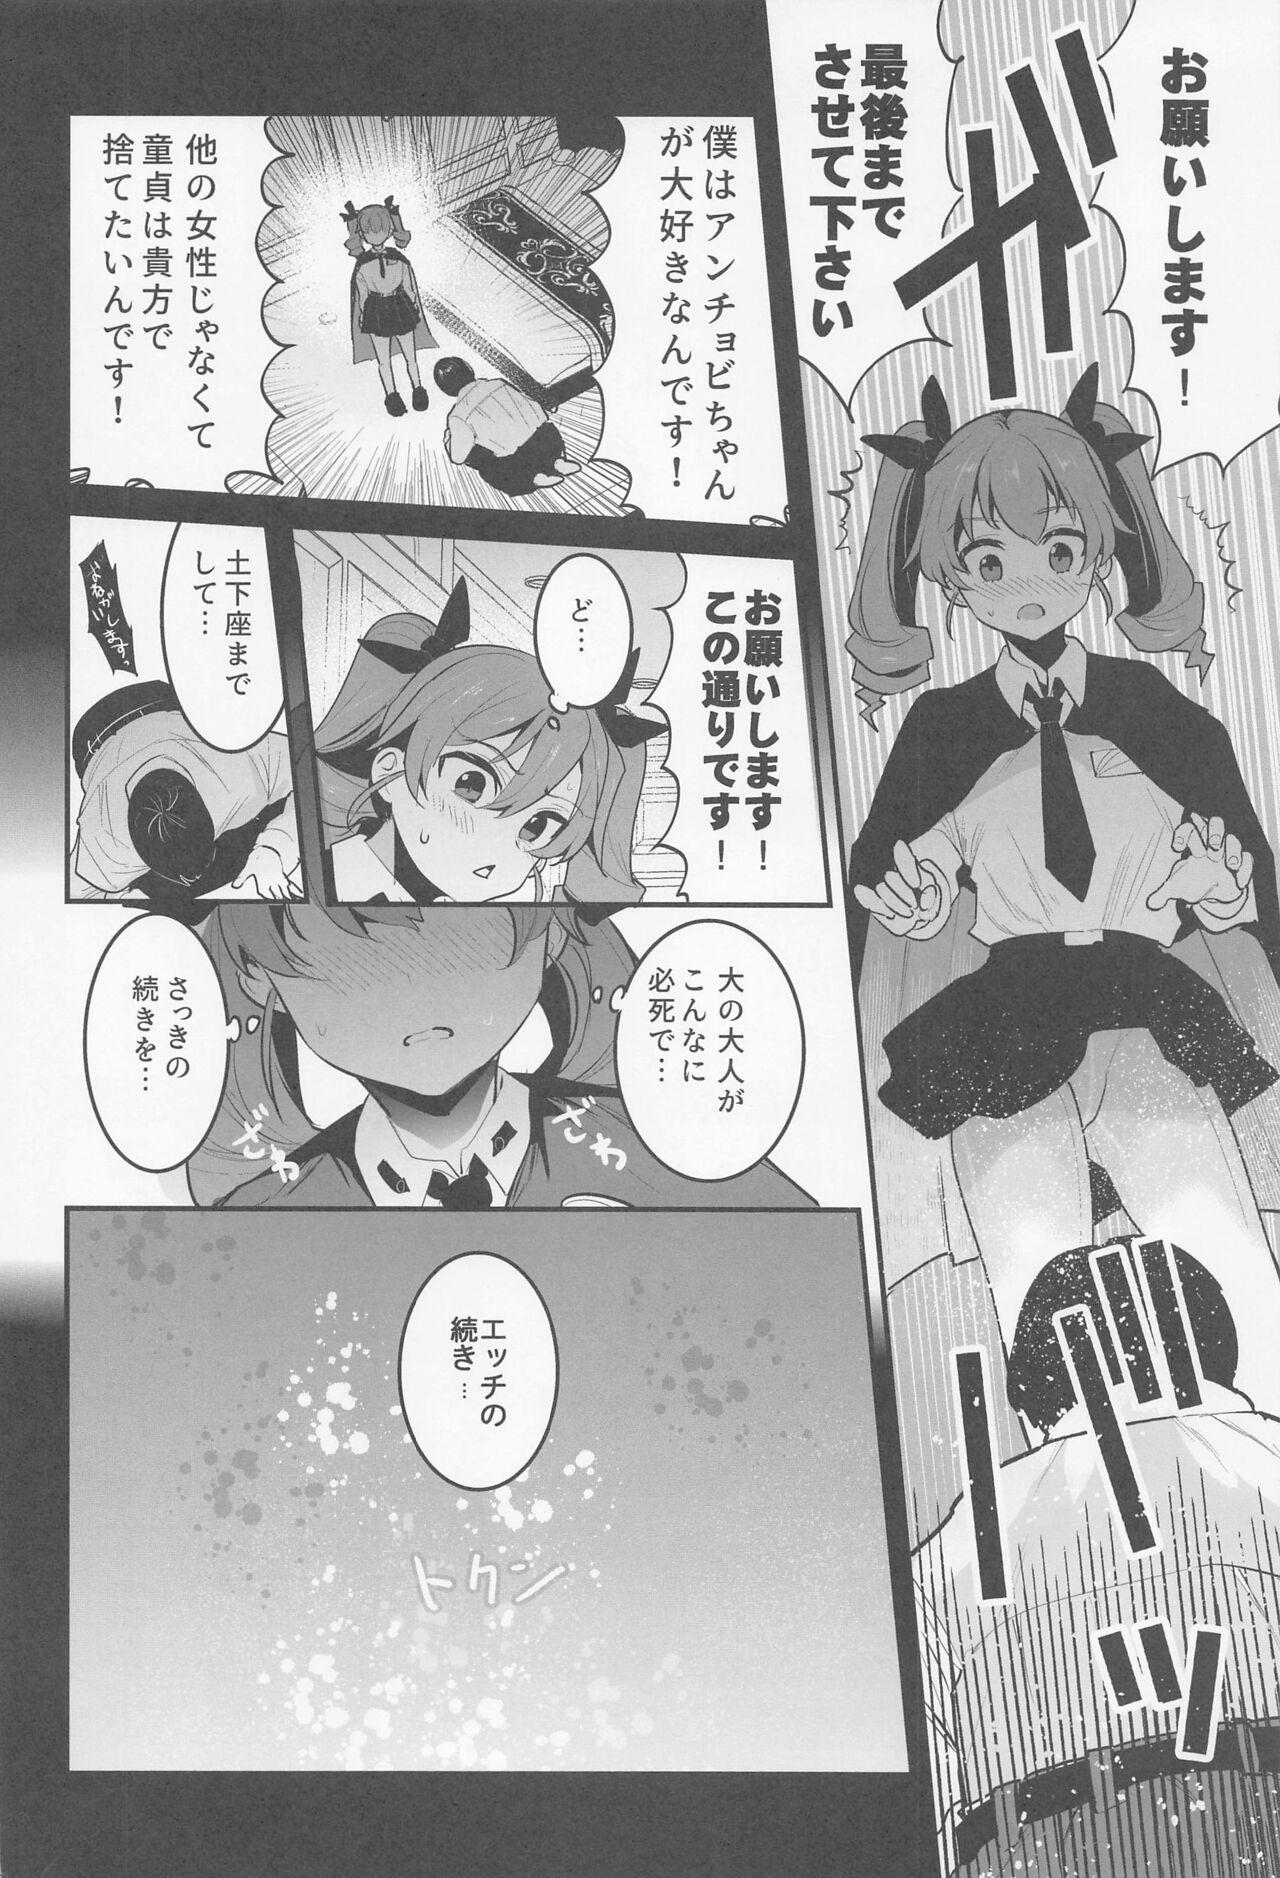 Play anchobi dogezadeonegaishitaraippatsuyarasetekuremashita - Girls und panzer Soft - Page 11